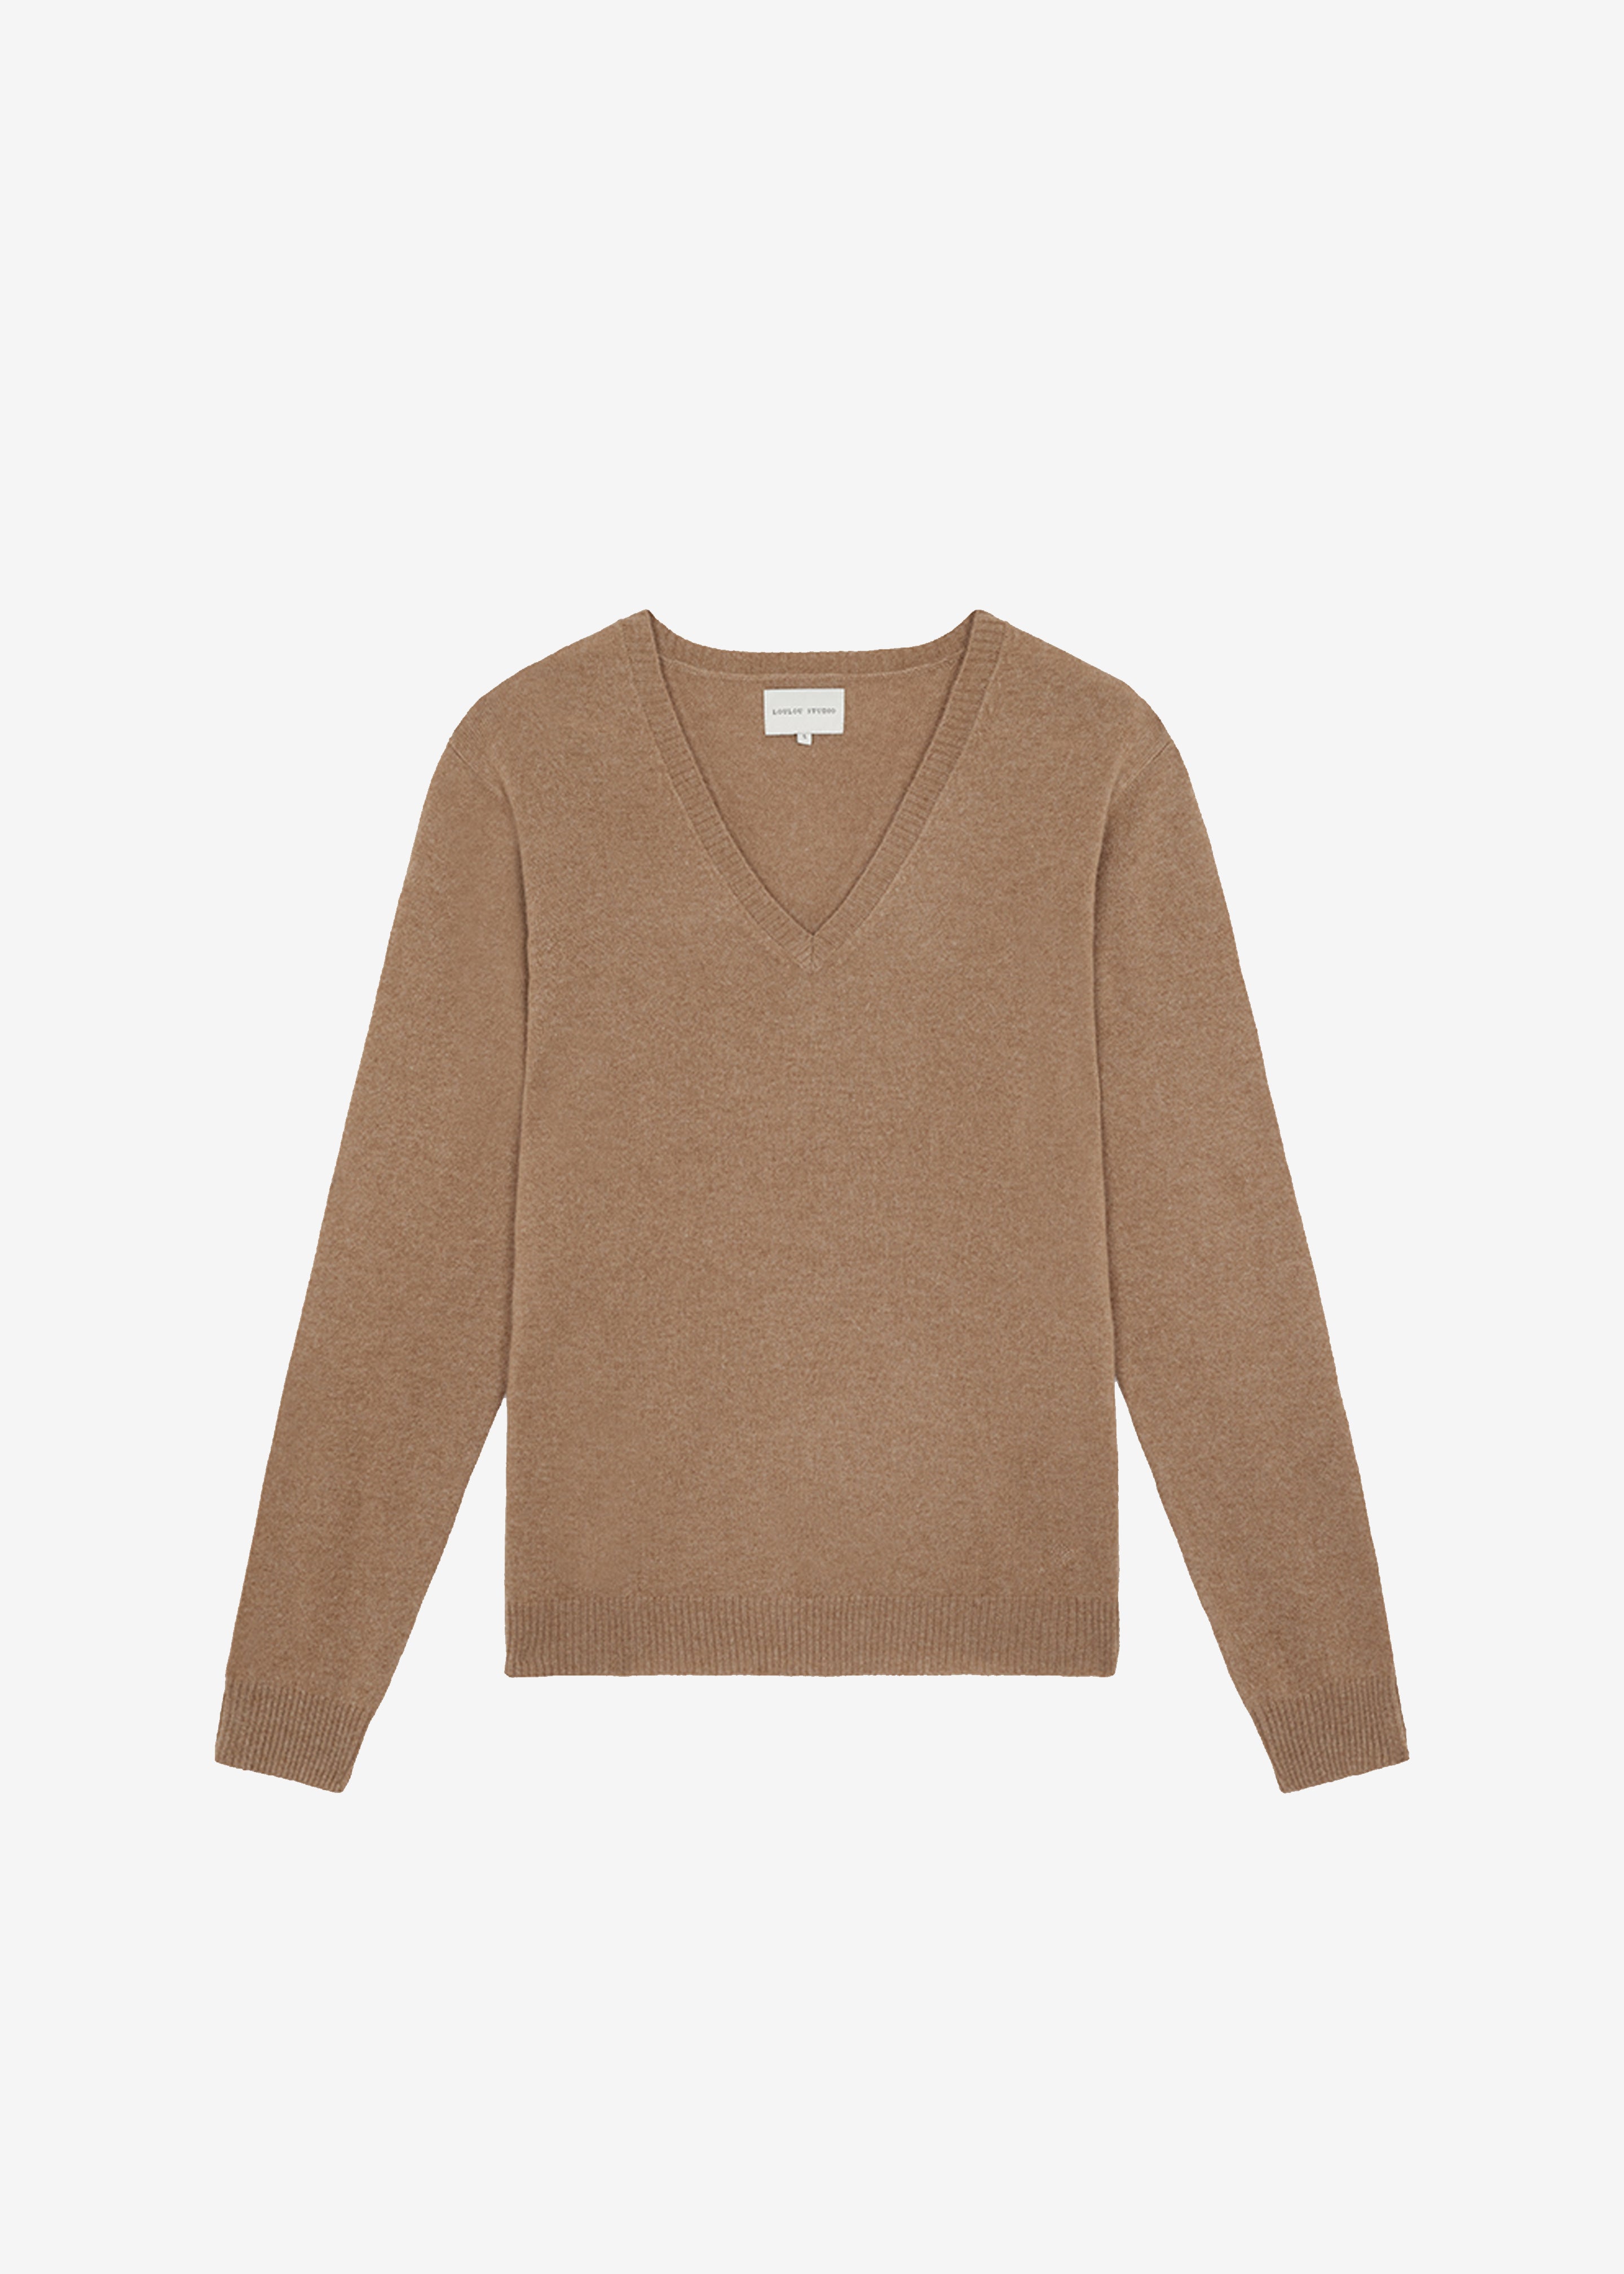 Loulou Studio Serafini V Neck Cashmere Sweater - Sand Melange - 7